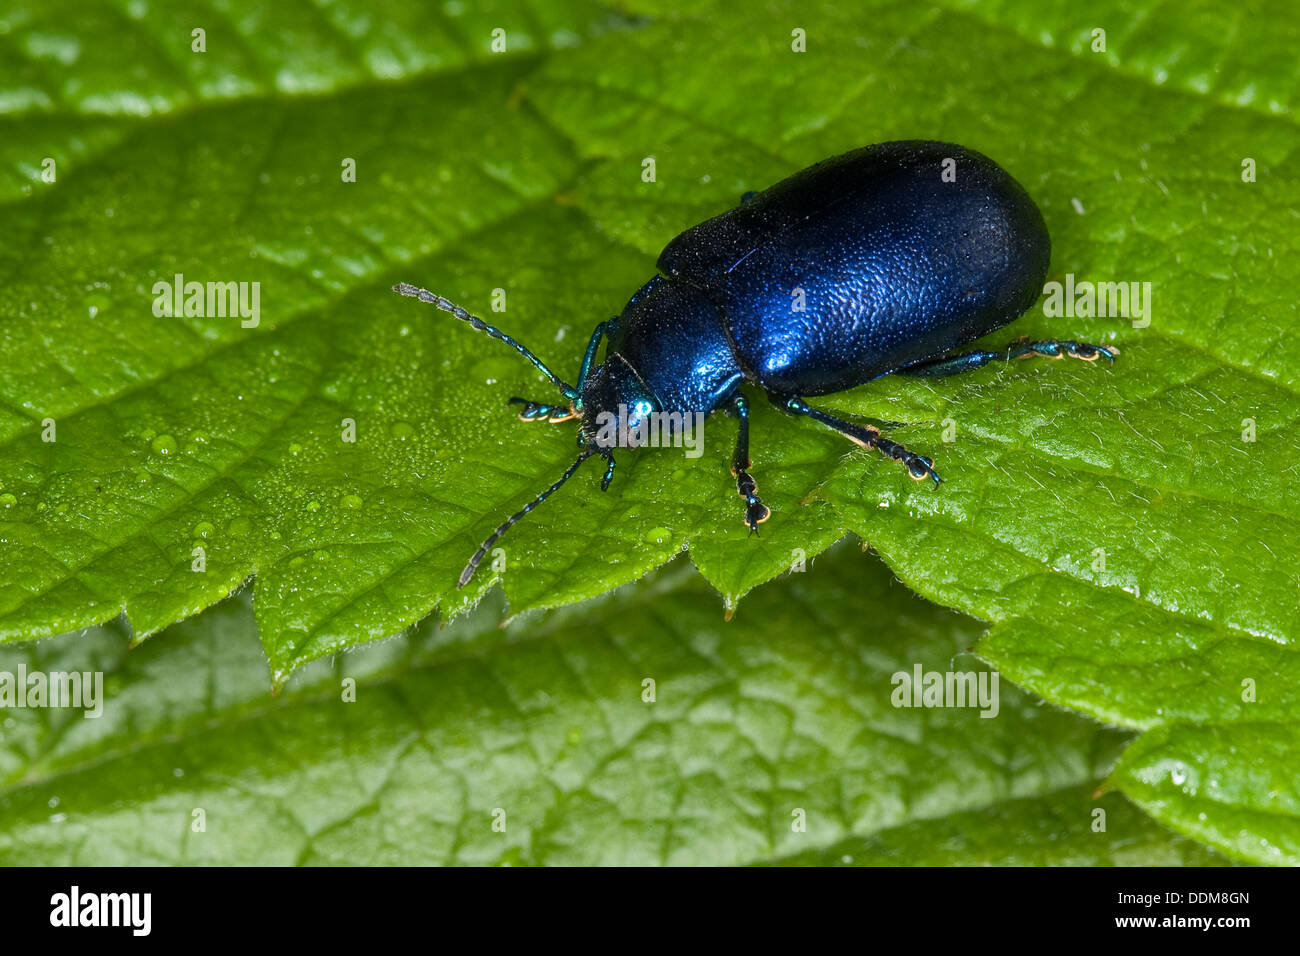 Leaf beetle, Leaf-beetle, Blattkäfer, Pestwurz-Blattkäfer, Oreina cacaliae oder Oreina speciosissima, Chrysochloa cacaliae Stock Photo